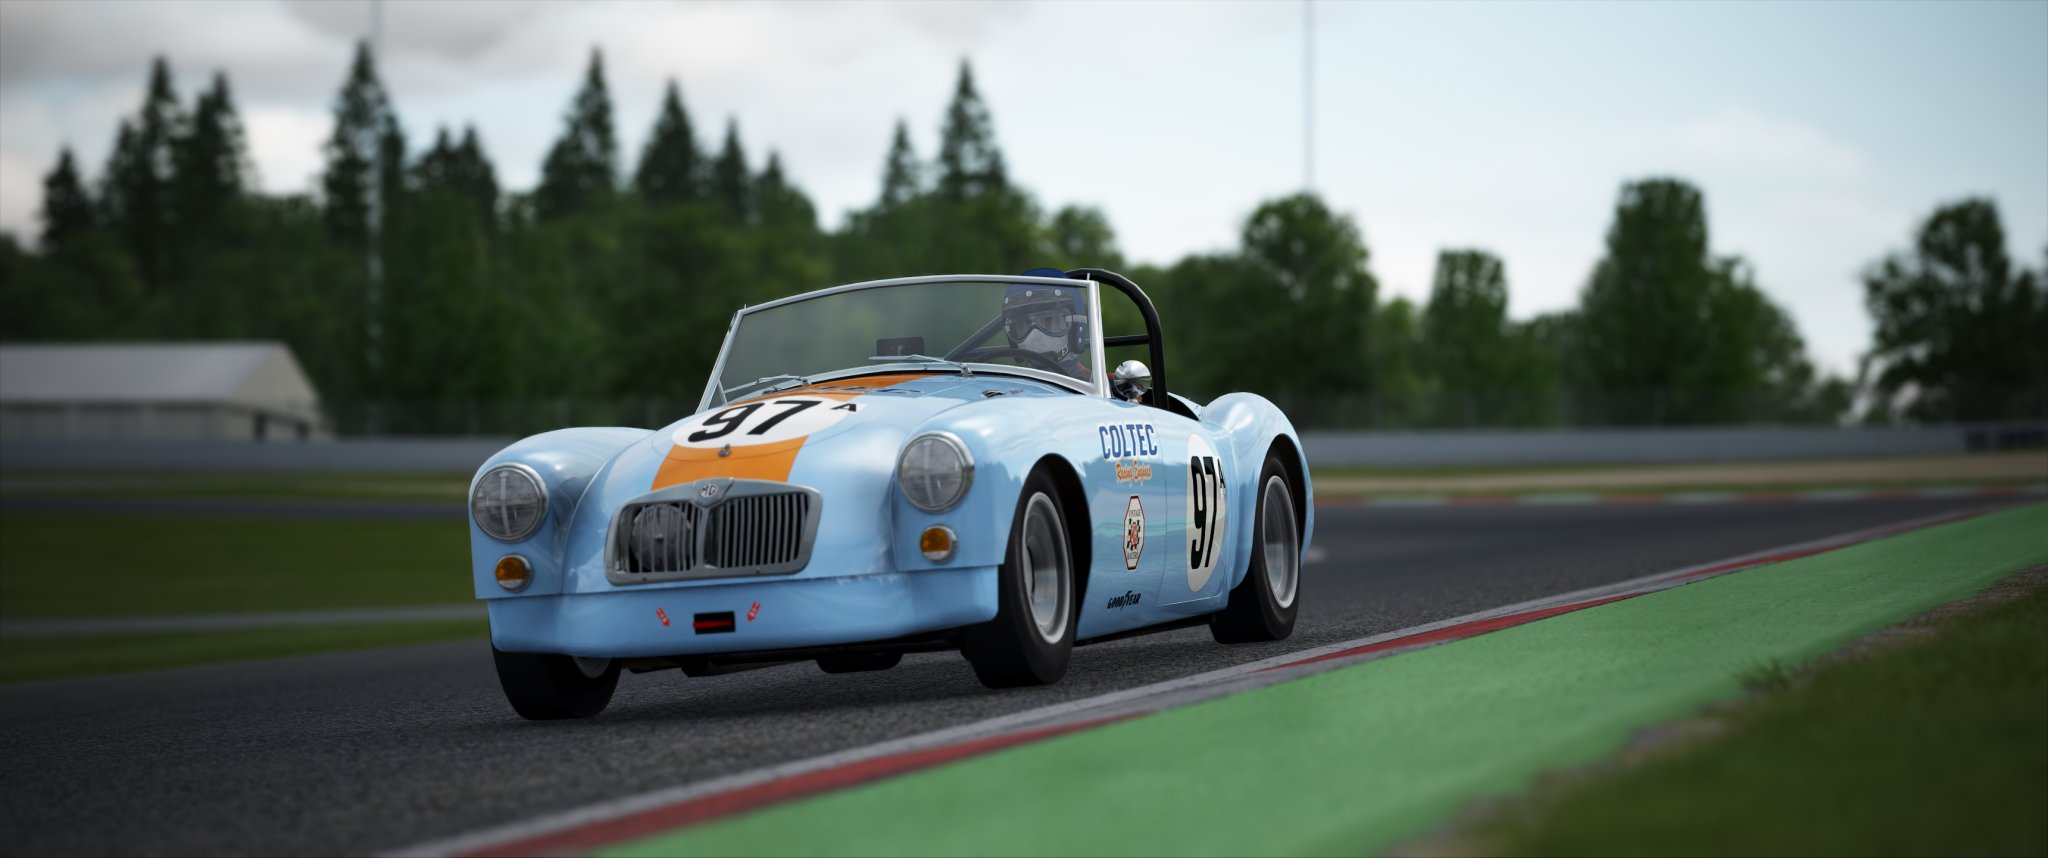 Screenshot_tc_legends_mg_a_race_ks_nurburgring_4-11-123-7-28-55.jpg